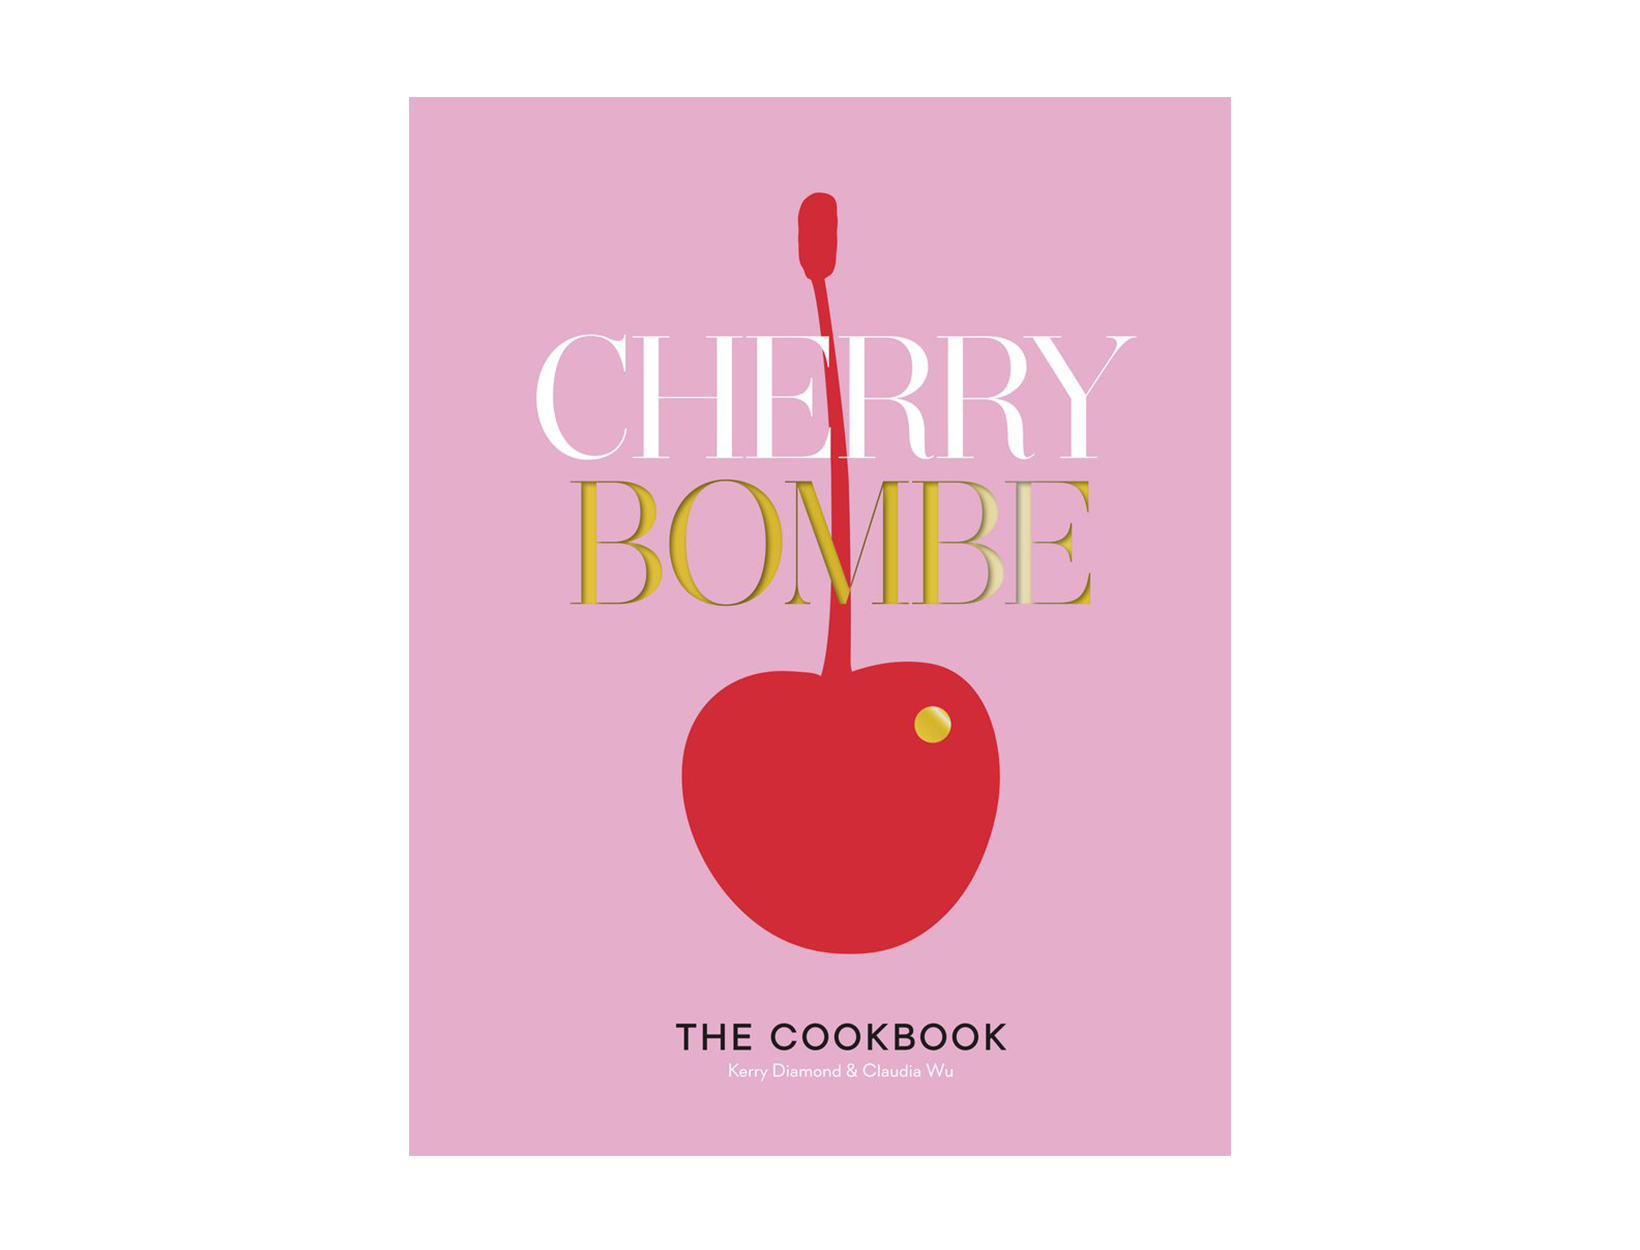 Cherry Bombe by Kerry Diamond and Claudia Wu